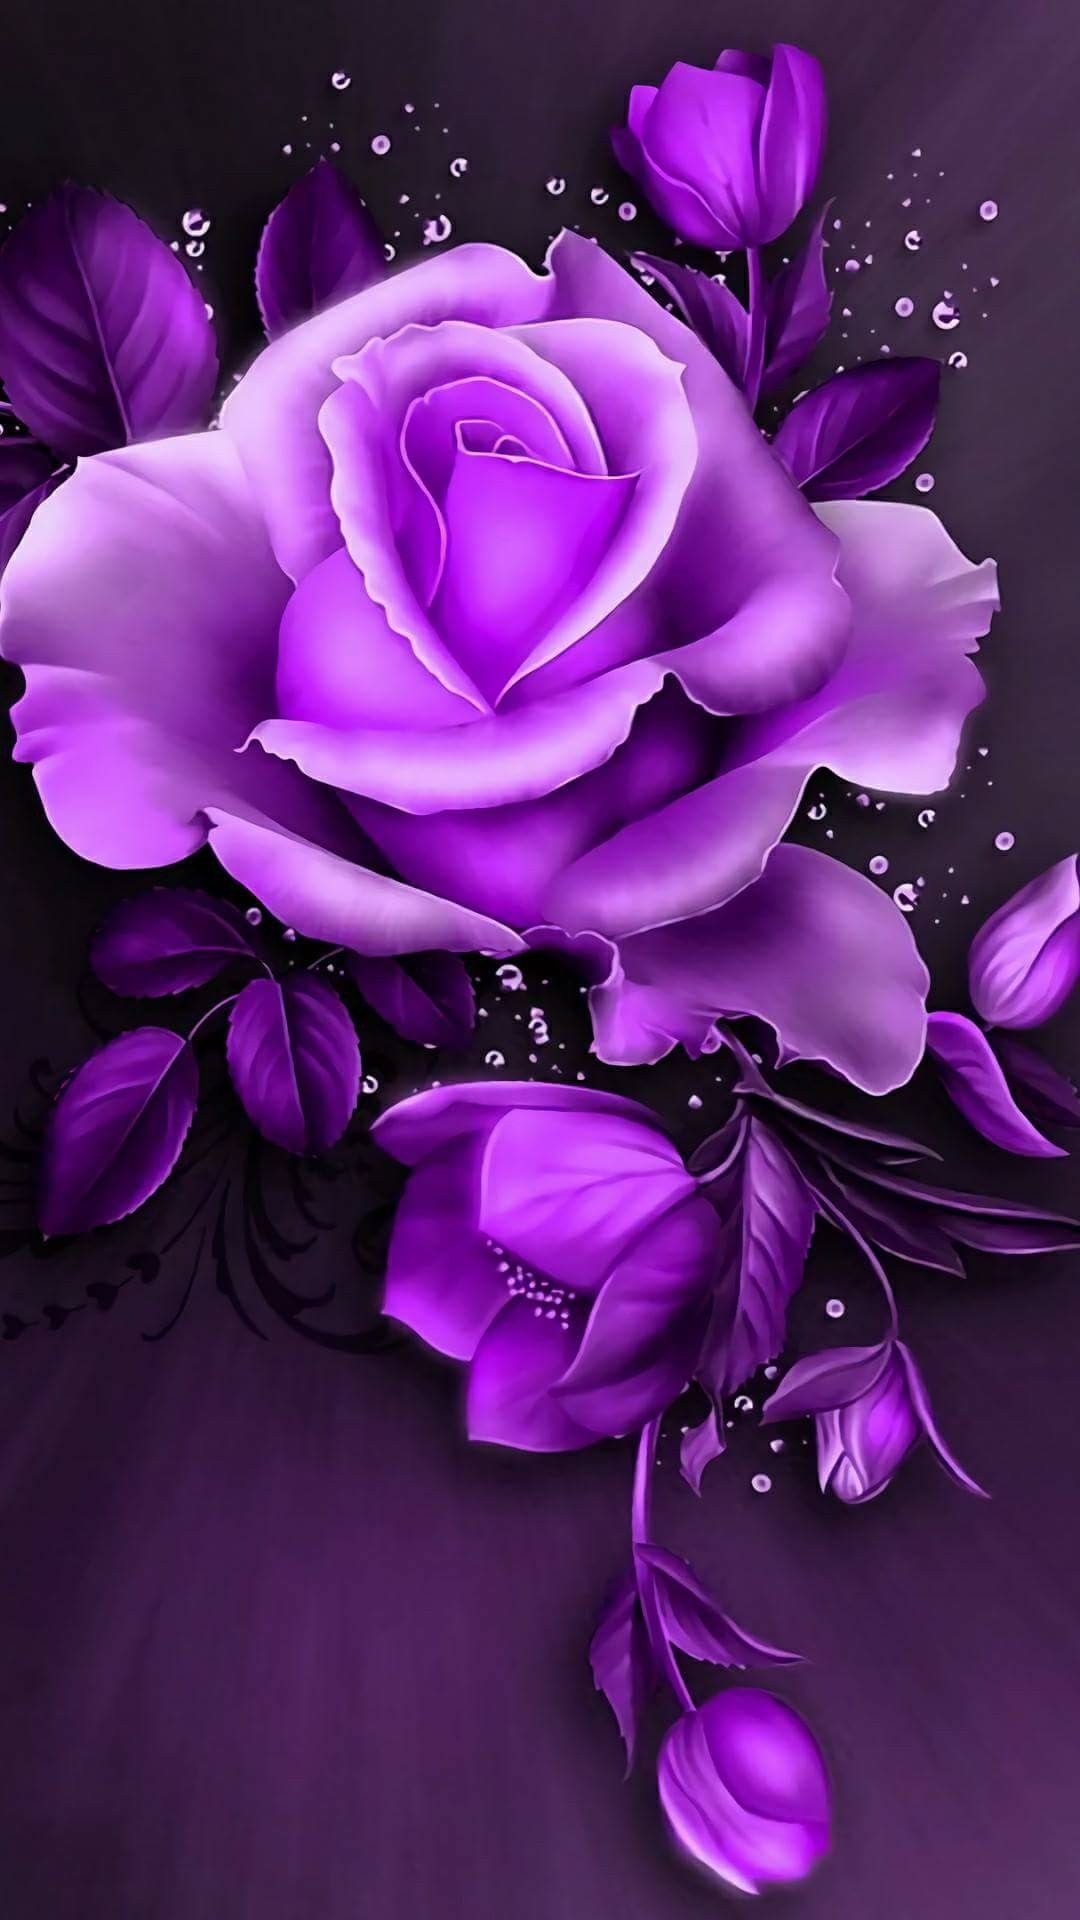 1080x1920, Rose Wallpaper, Wallpaper Backgrounds, Purple - Purple Rose Flowers Wallpaper Hd - HD Wallpaper 